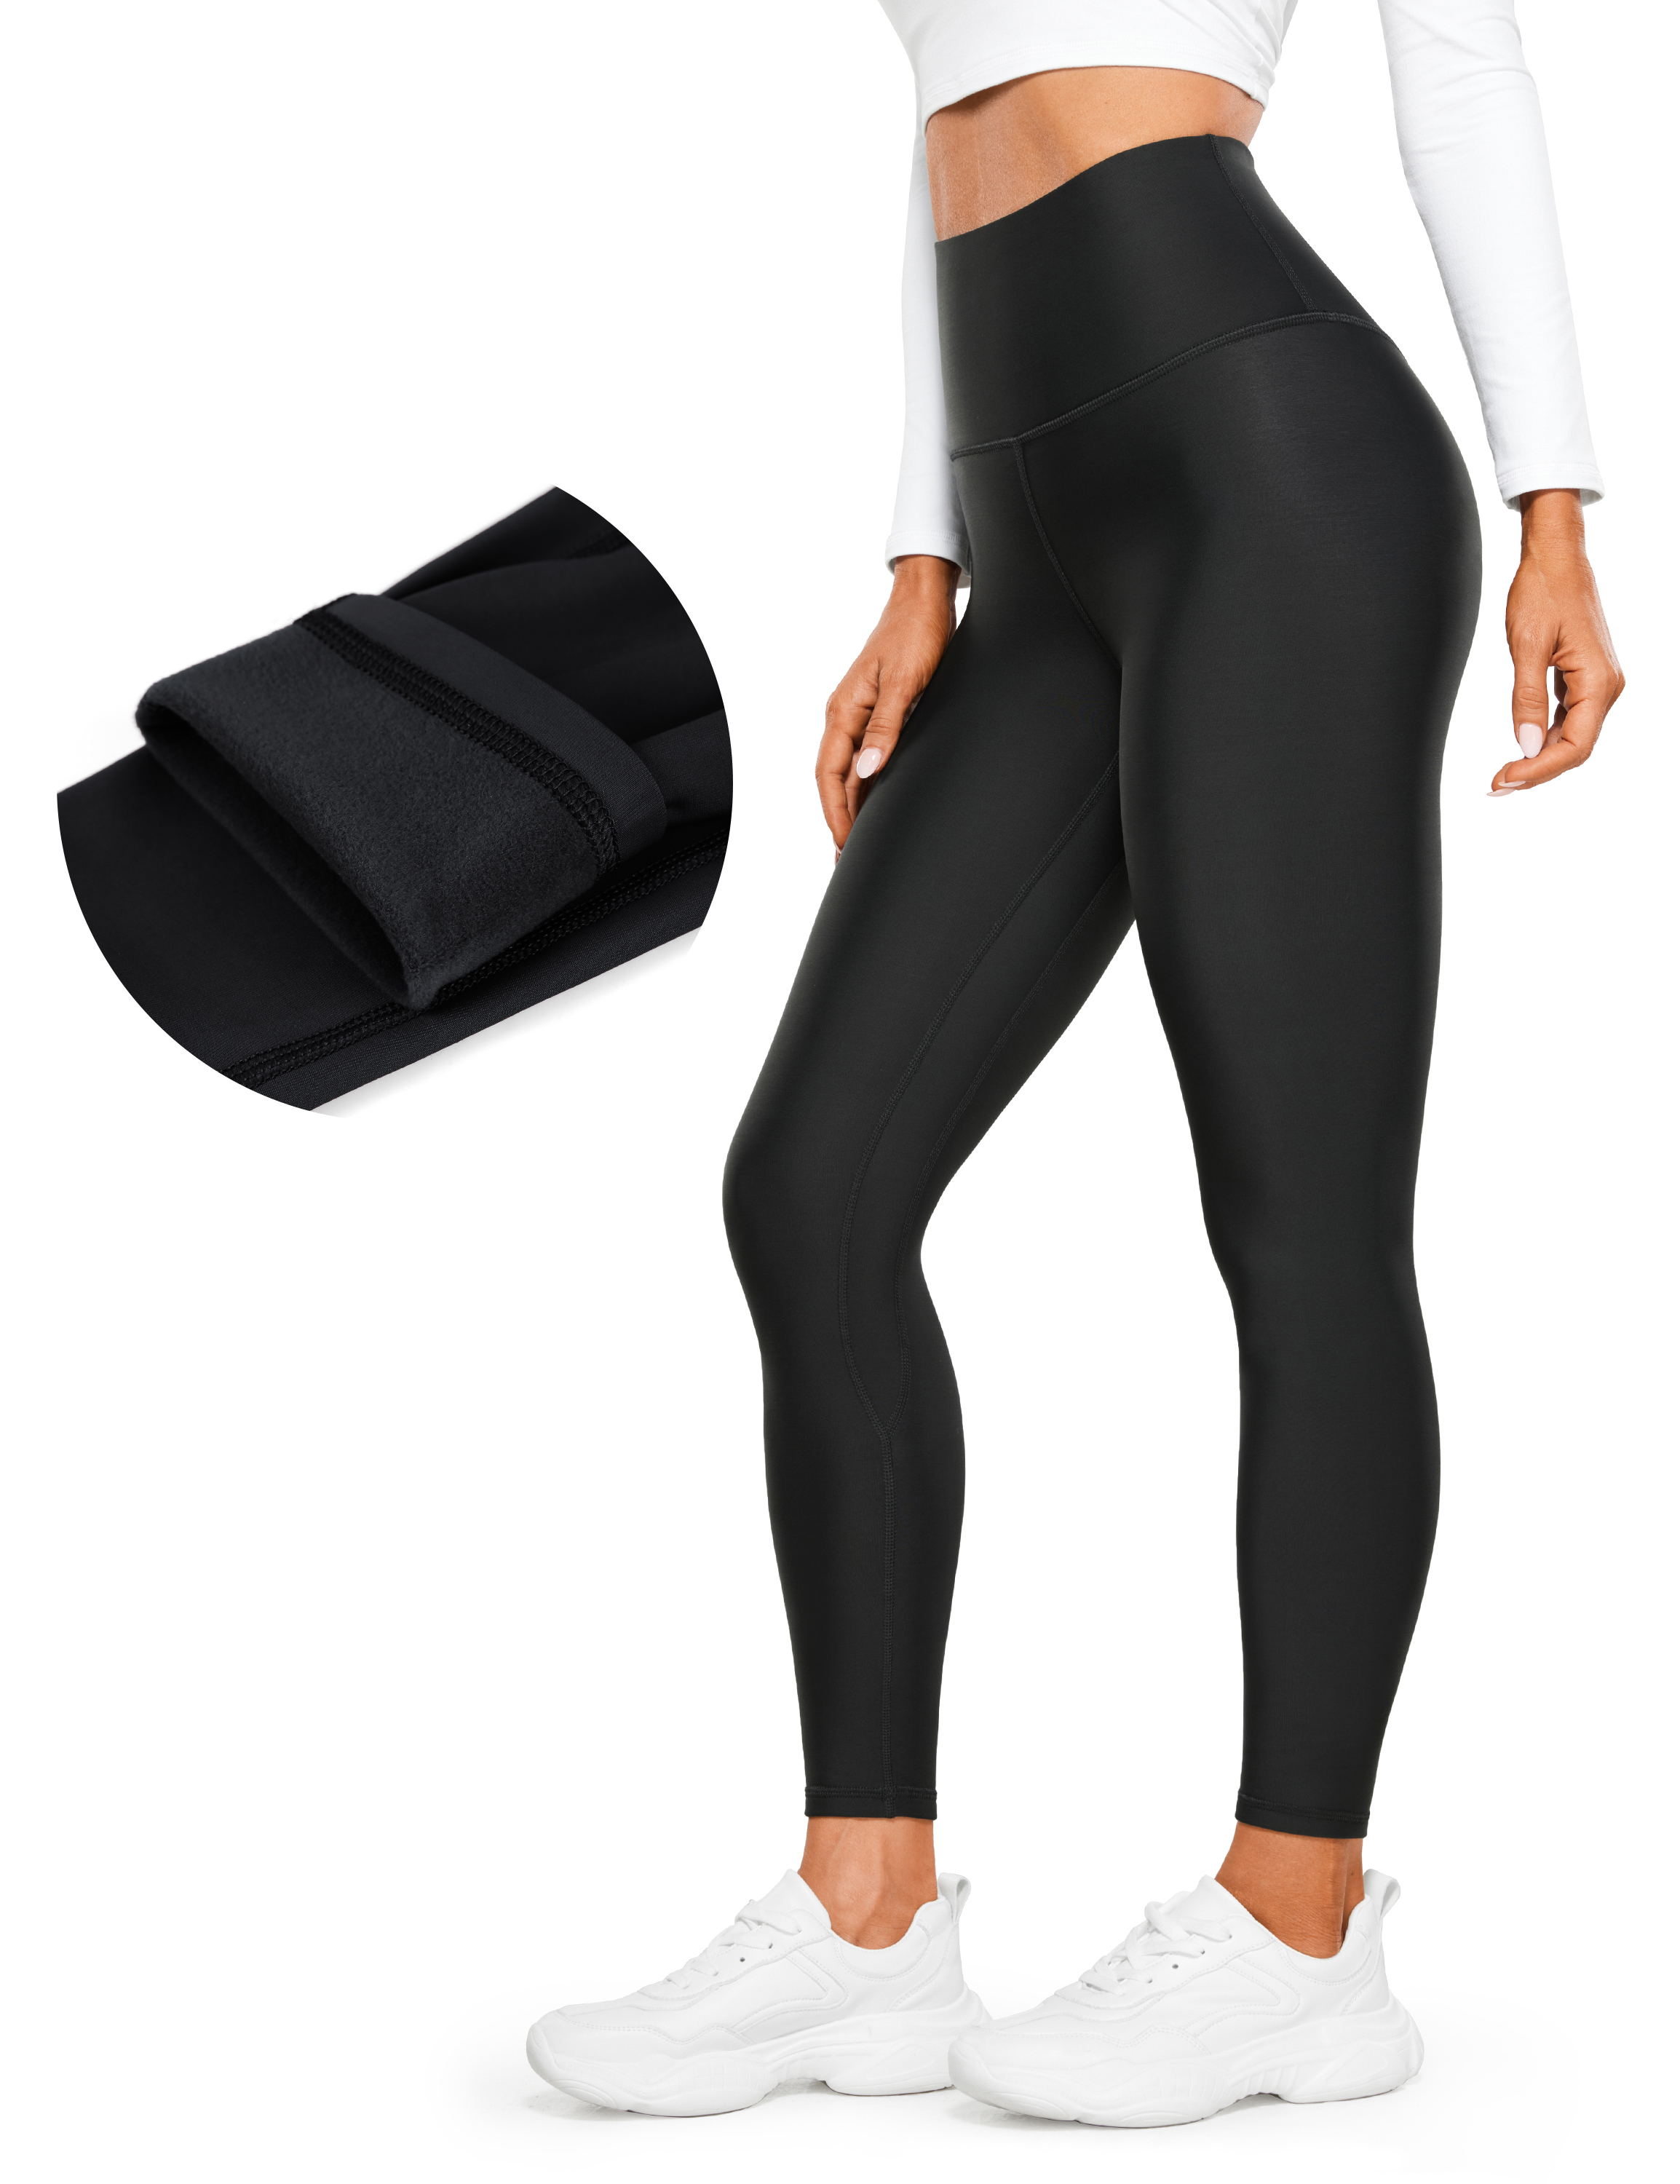 CRZ YOGA Women Black High Waist Yoga Pants Workout Leggings Sz XL